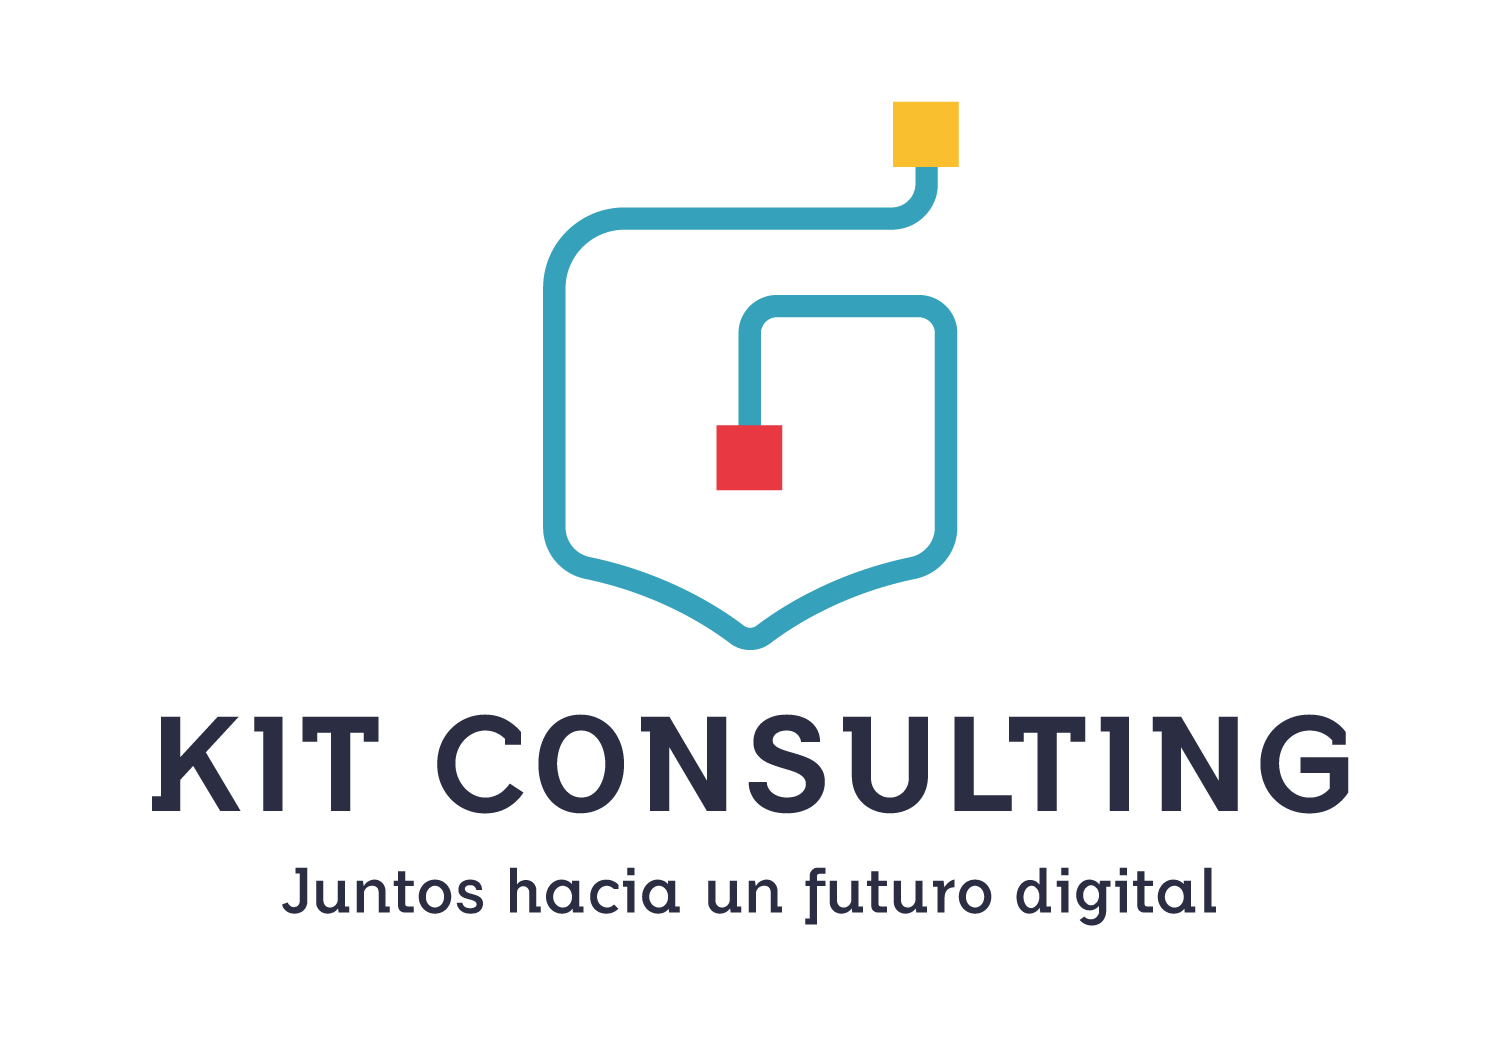 Logo Kit Consulting